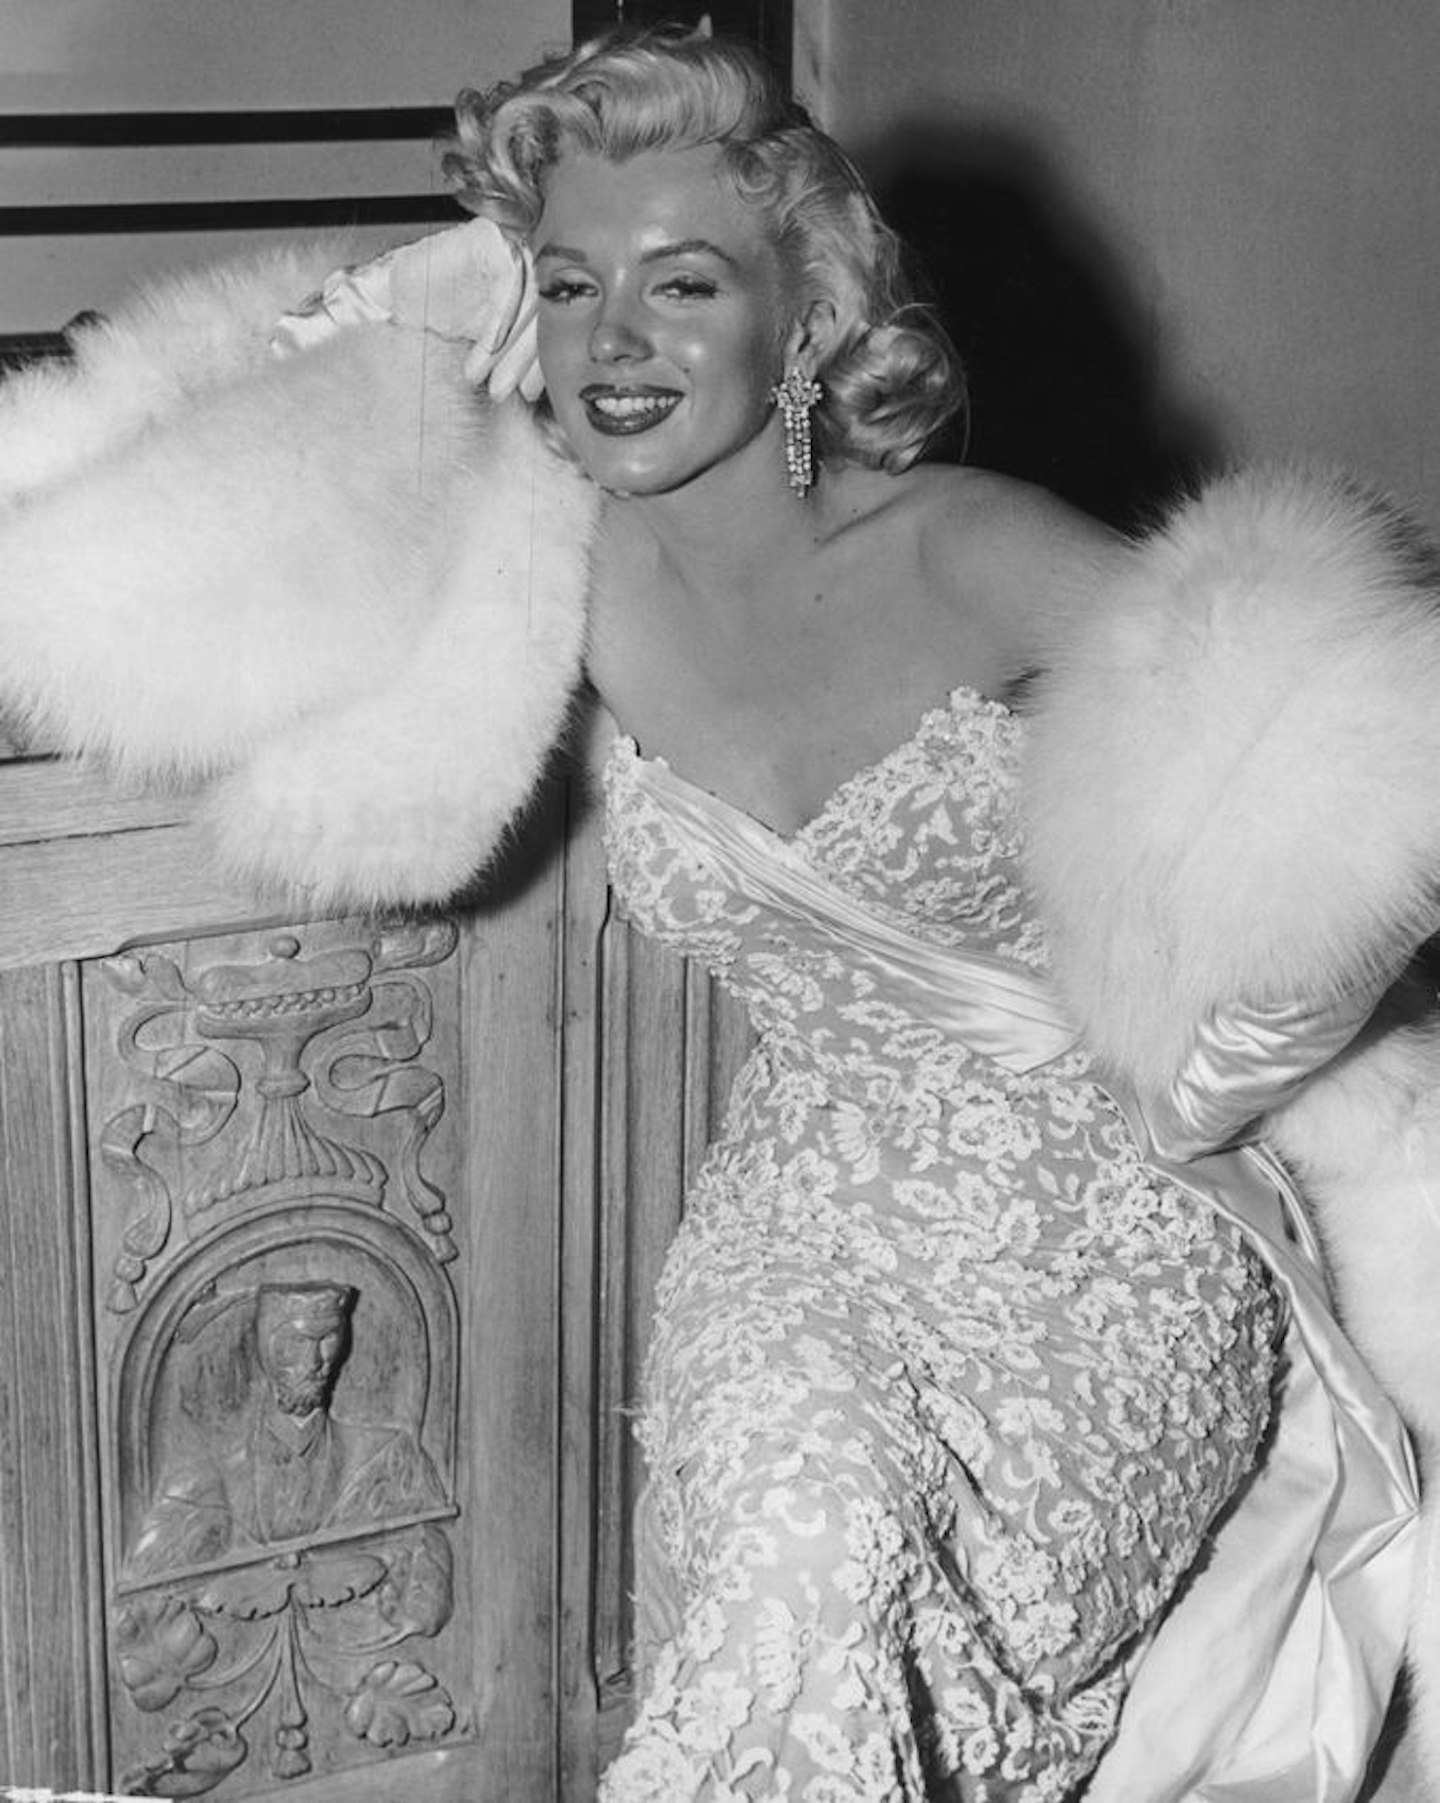 Marilyn Monroe's Fashion Legacy (PHOTOS)